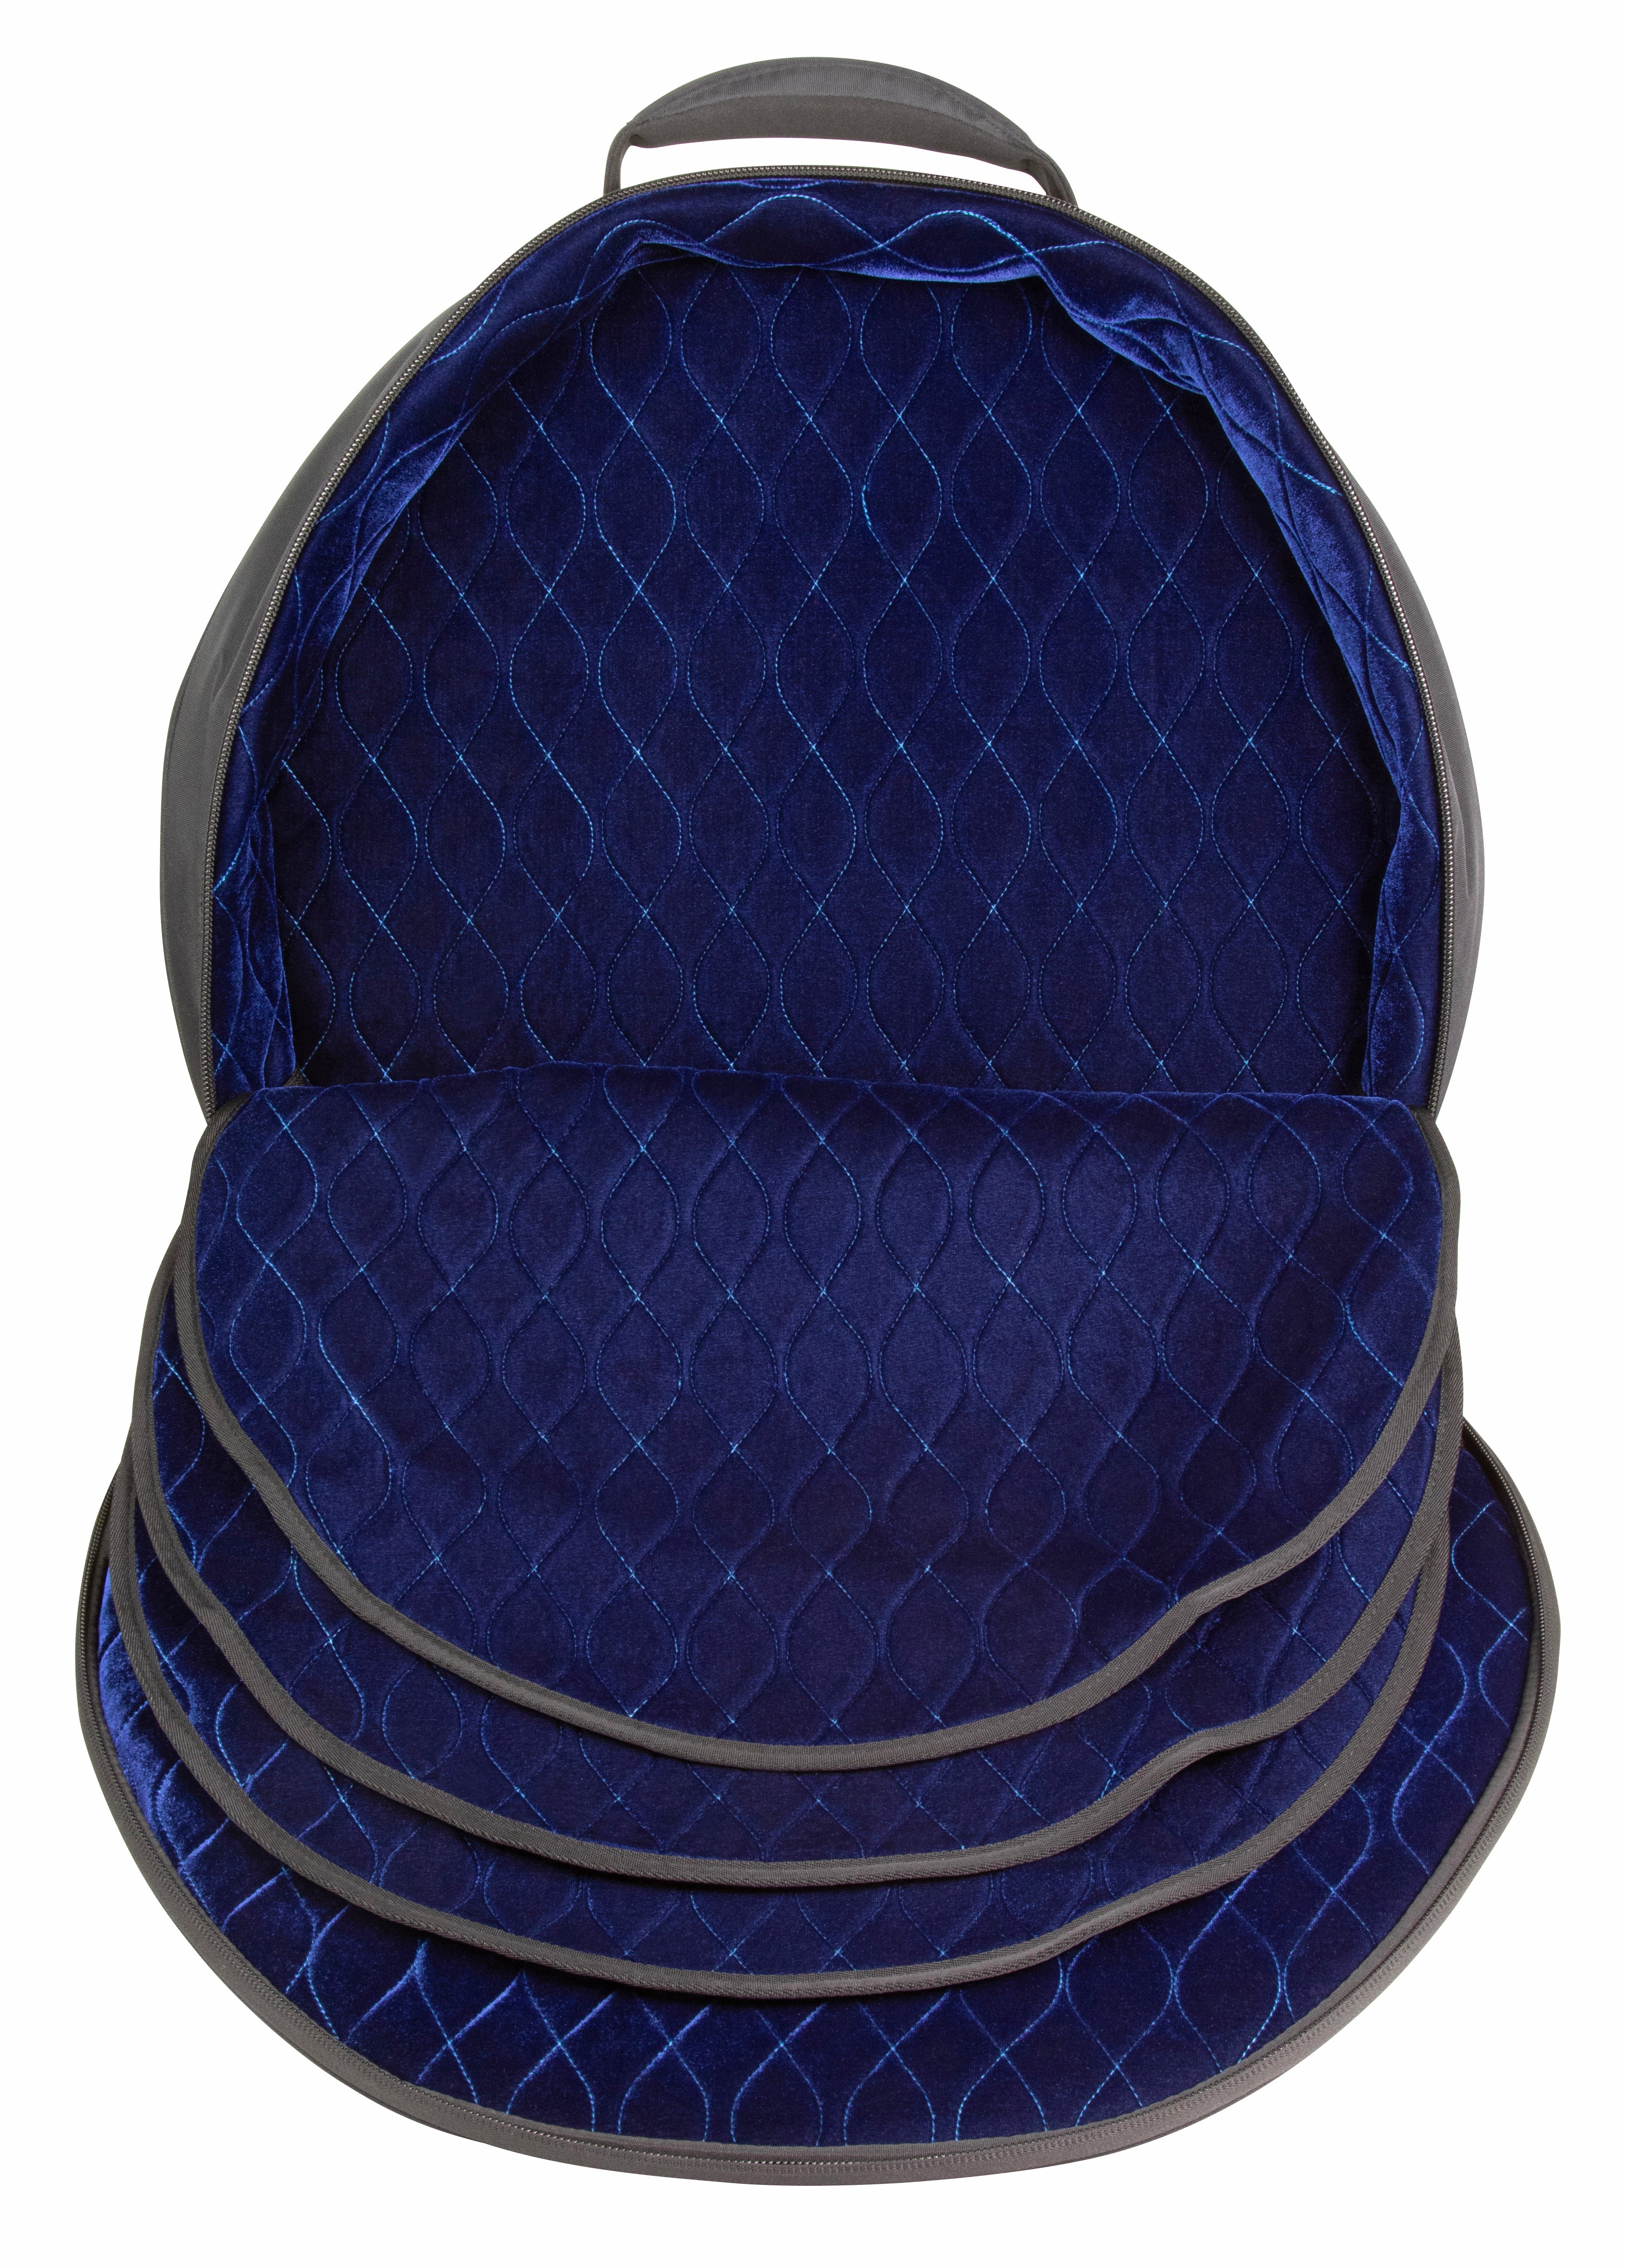 RBX Cymbal Bag - Interior